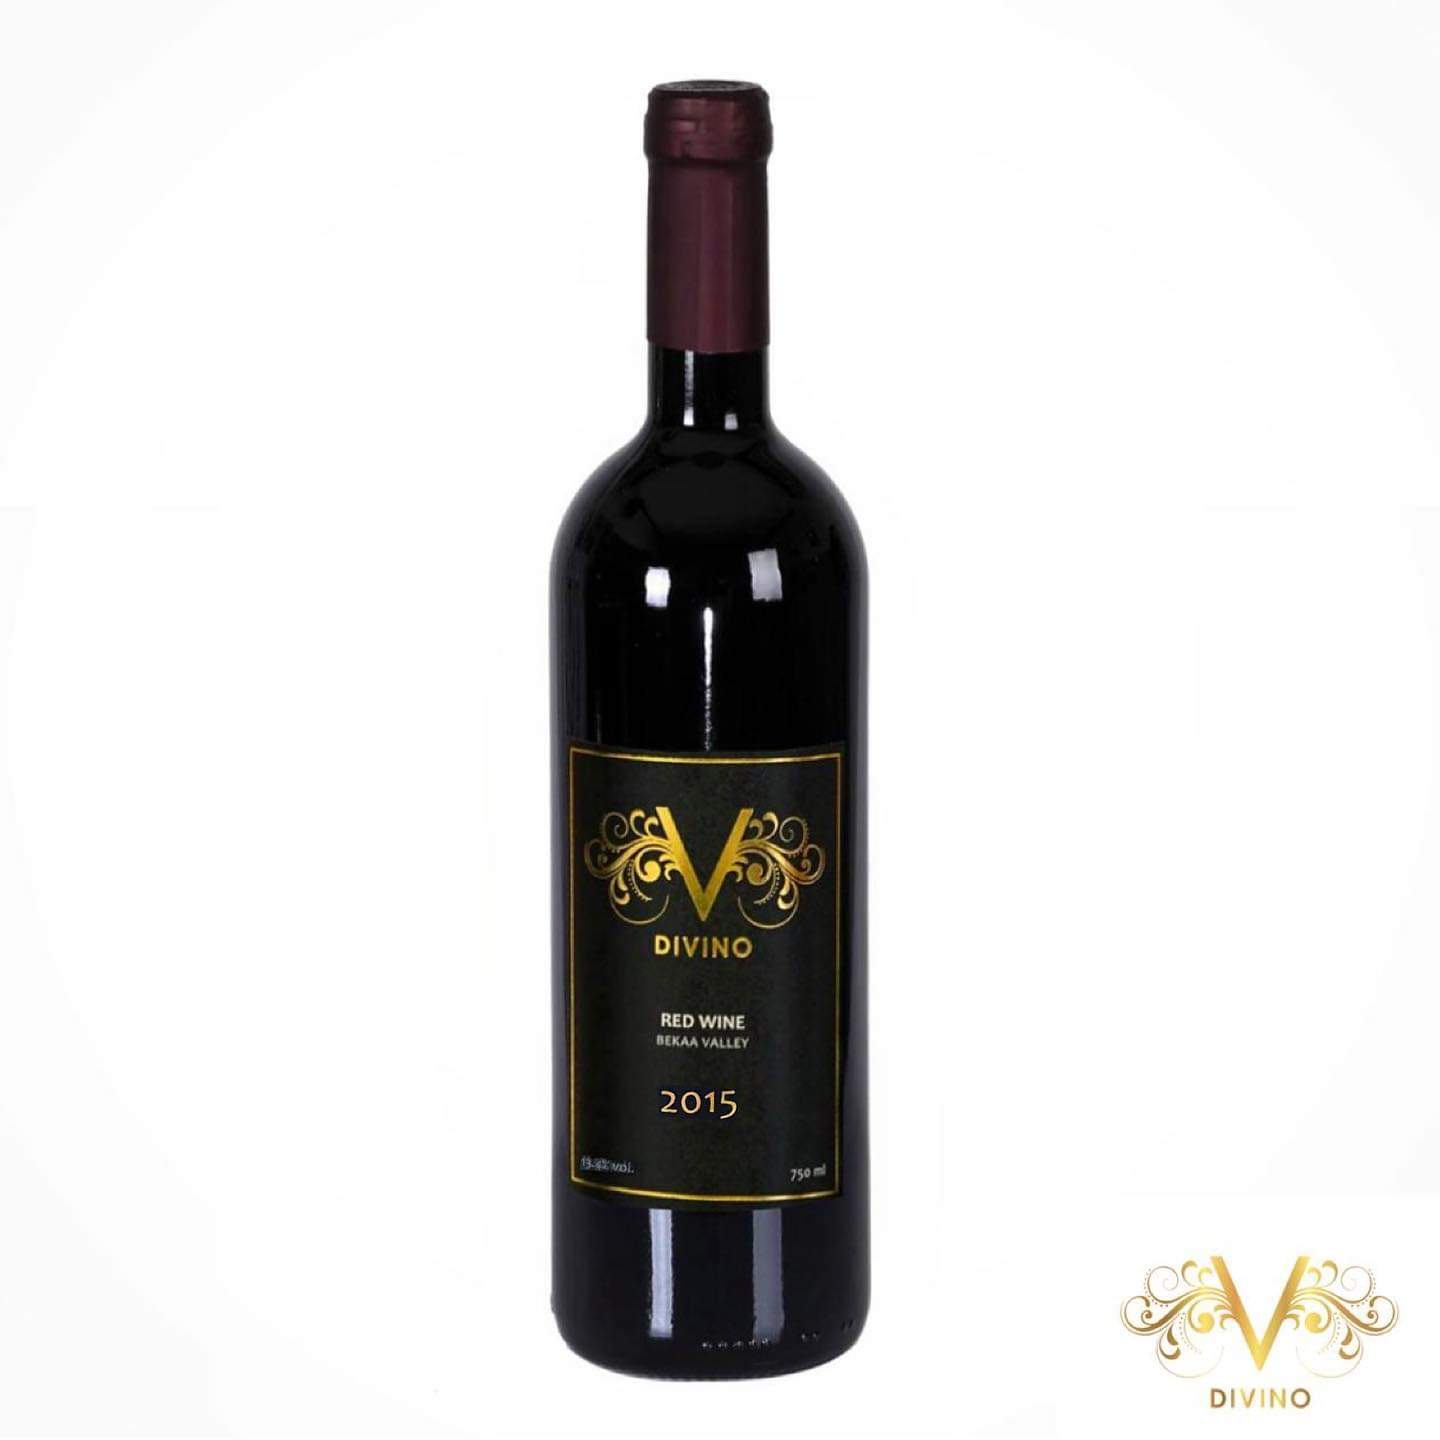 Divino Red Wine Bekaa Valley 2015 750ml